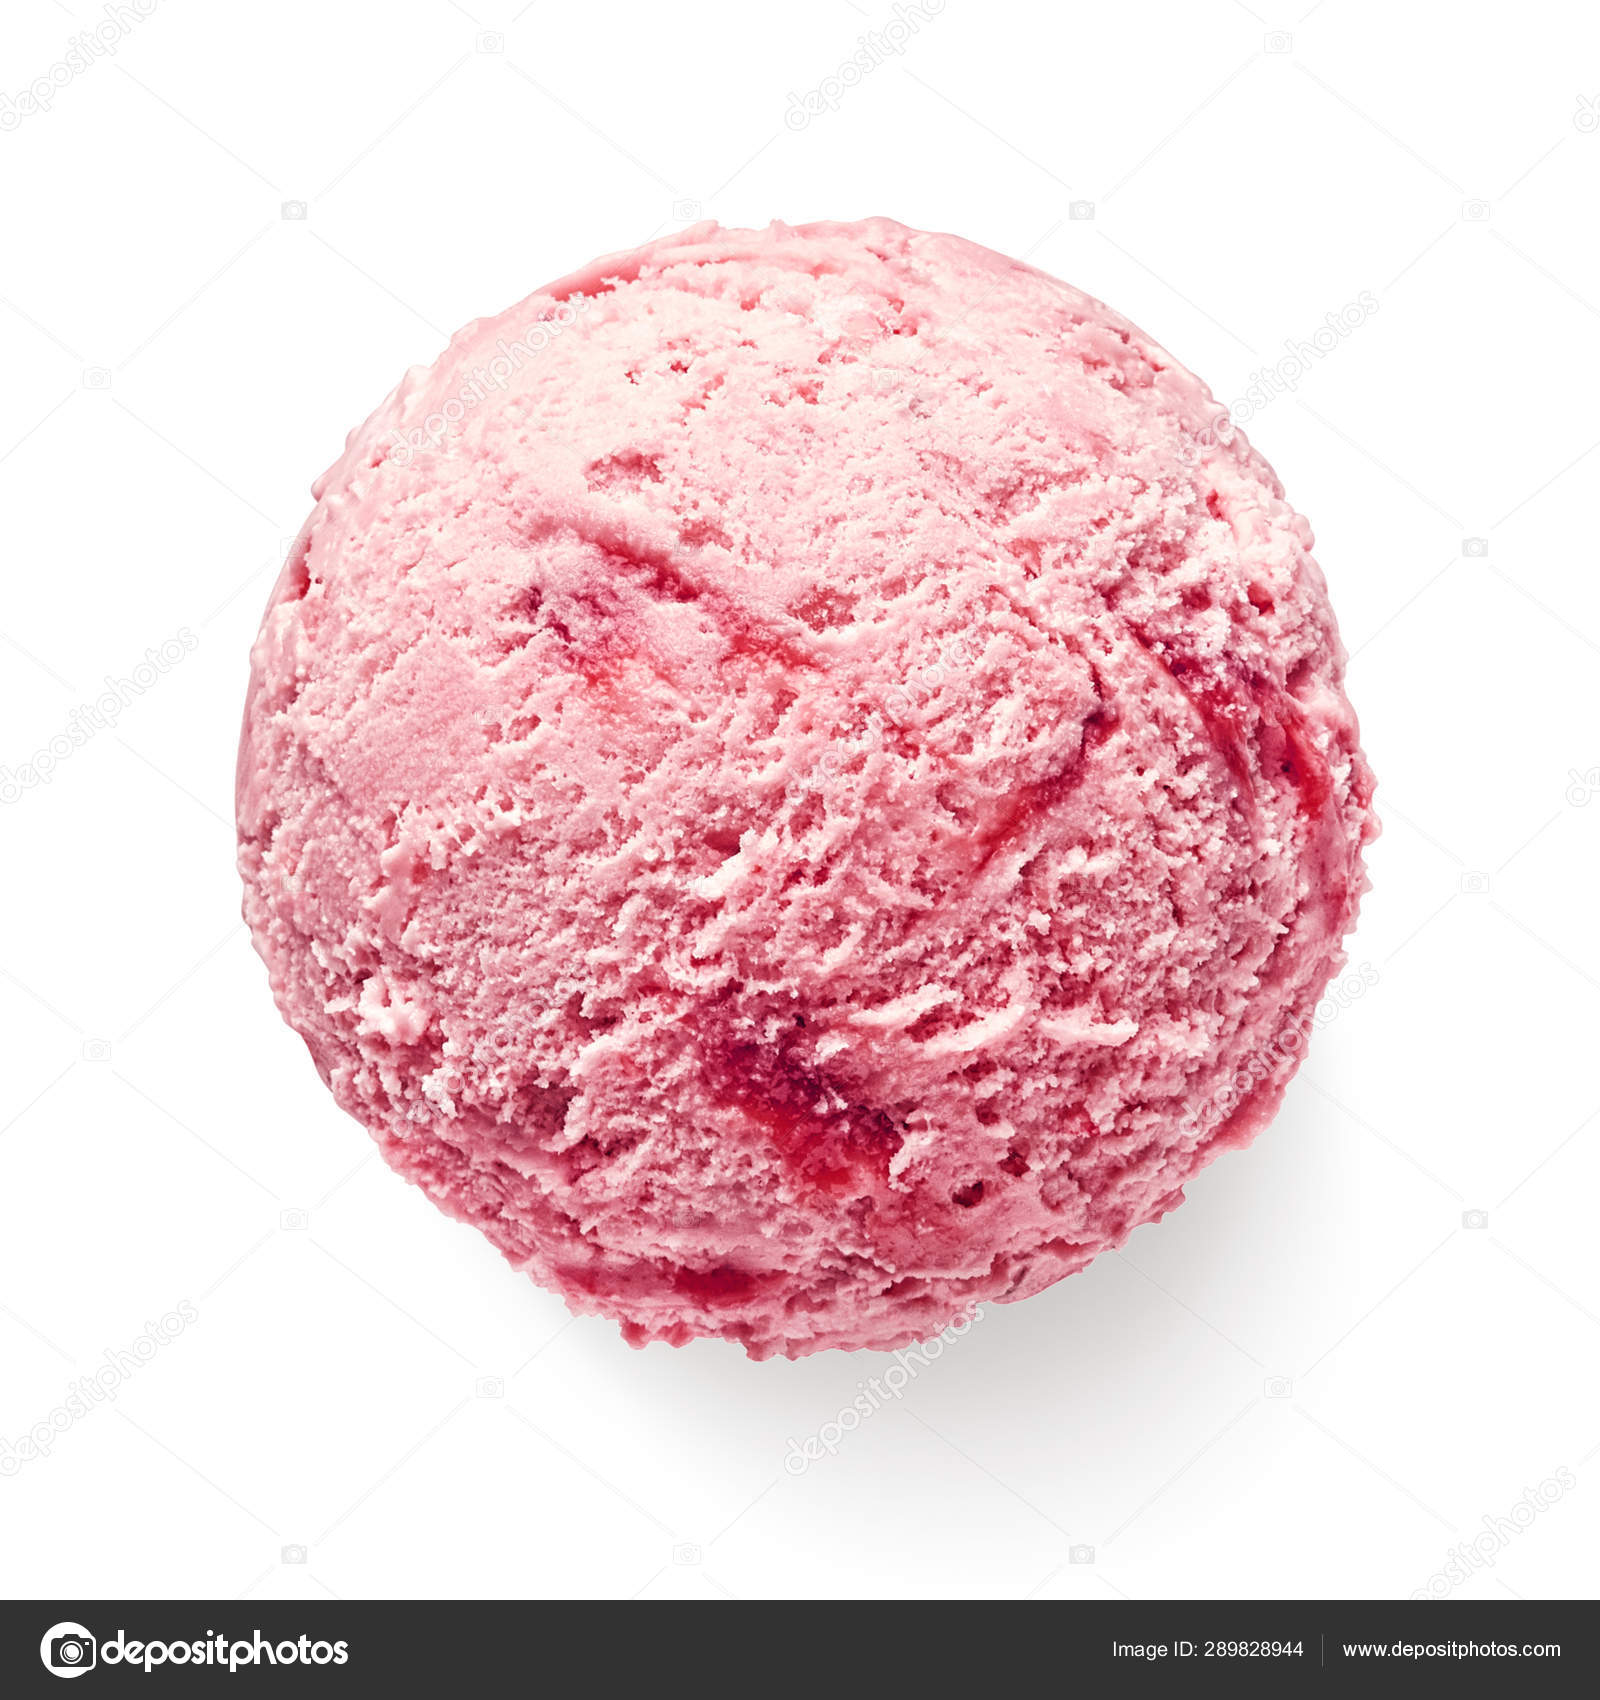 https://st4.depositphotos.com/1003272/28982/i/1600/depositphotos_289828944-stock-photo-single-strawberry-ice-cream-ball.jpg